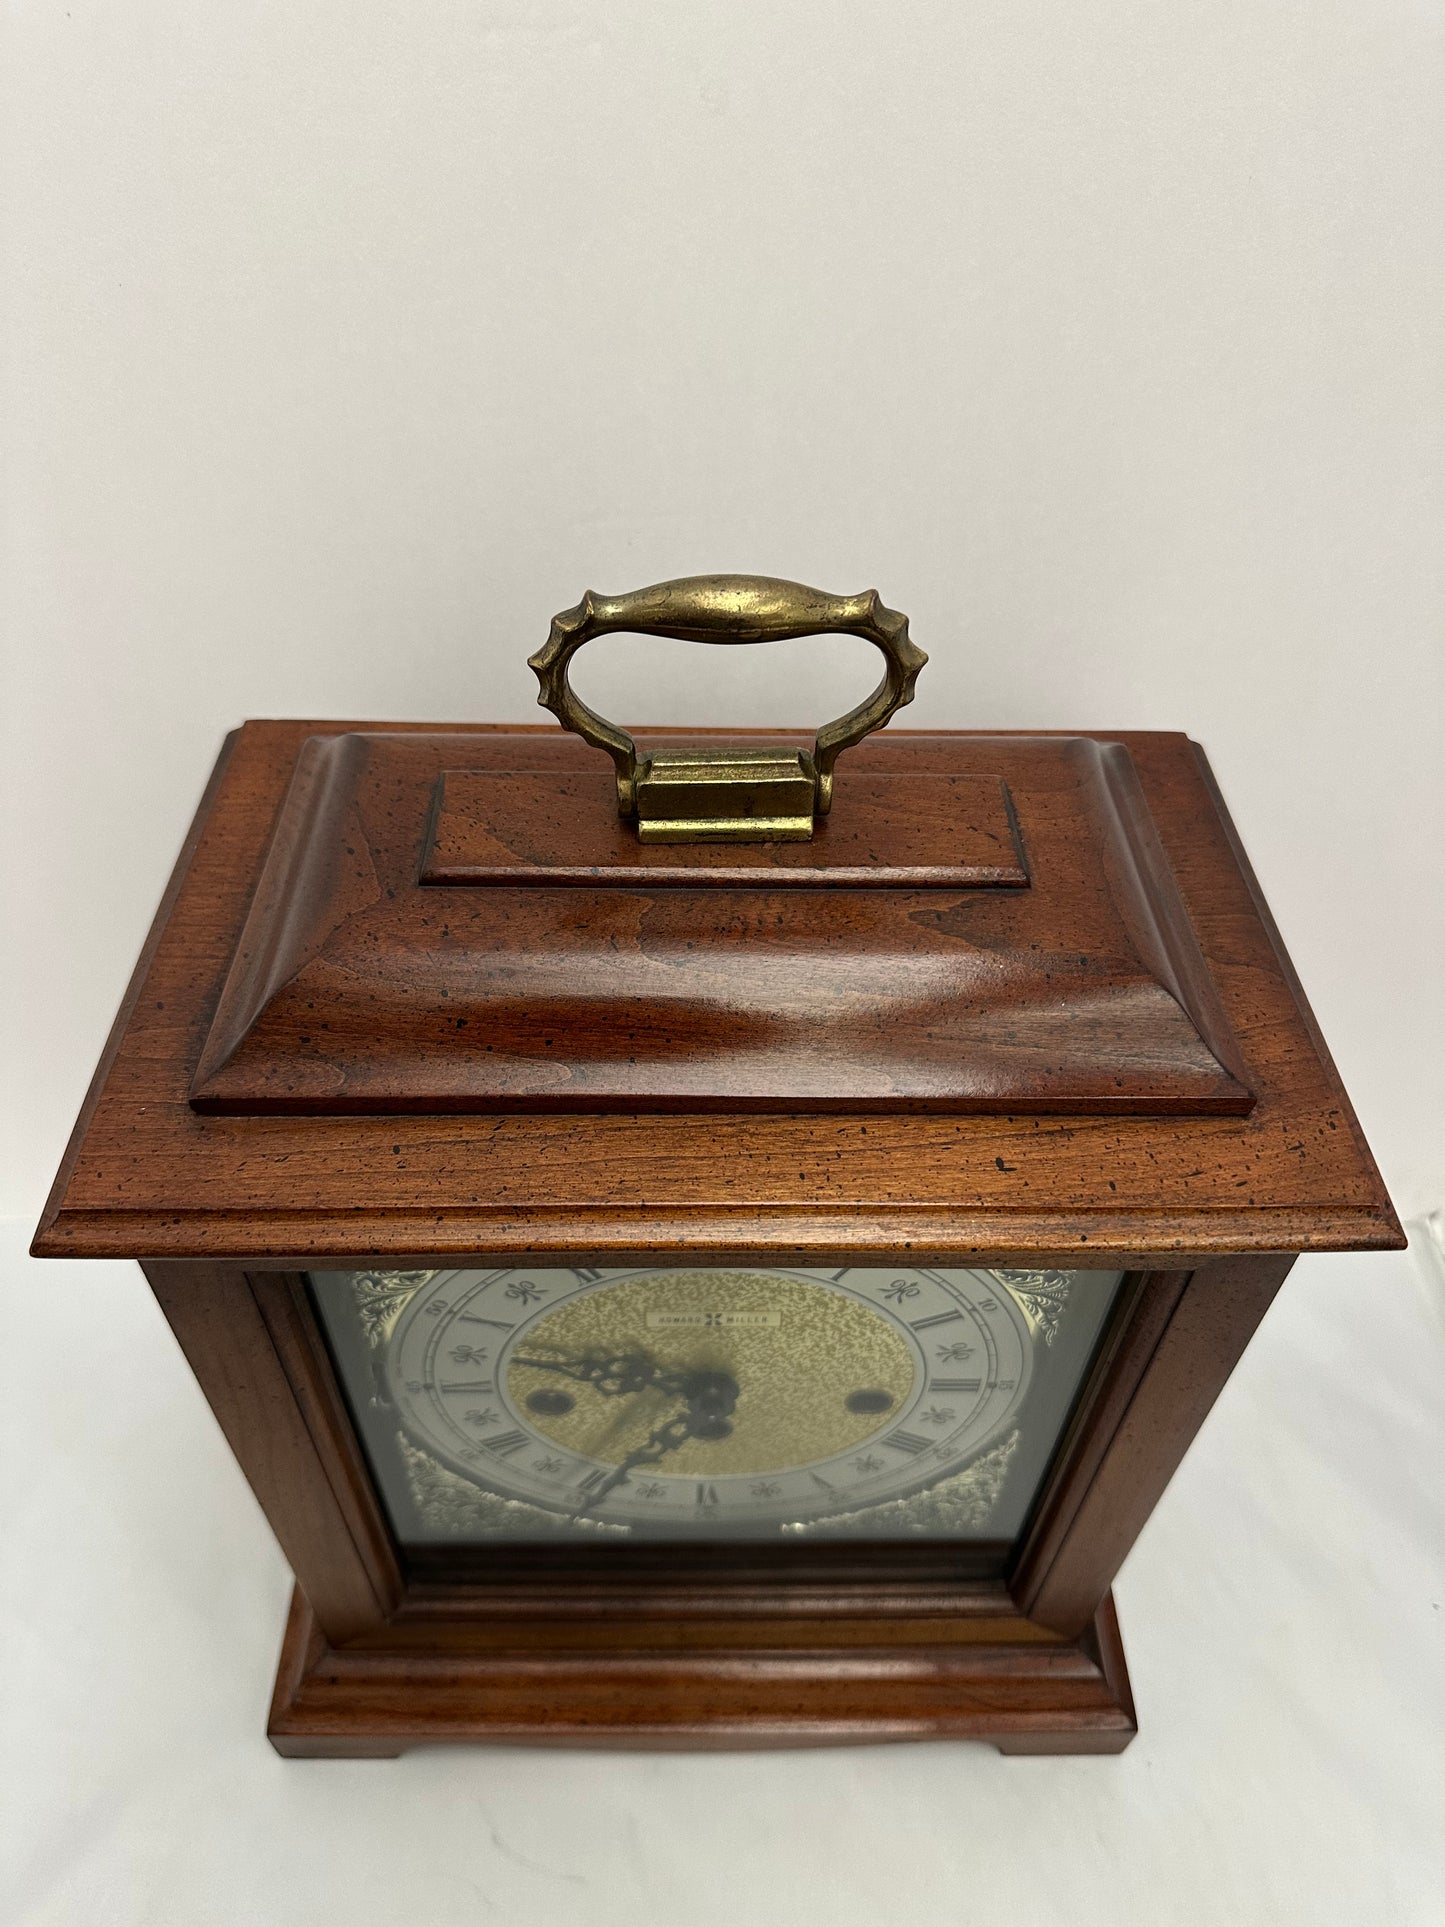 Vintage - Howard Miller Mantel Clock Graham 612-437